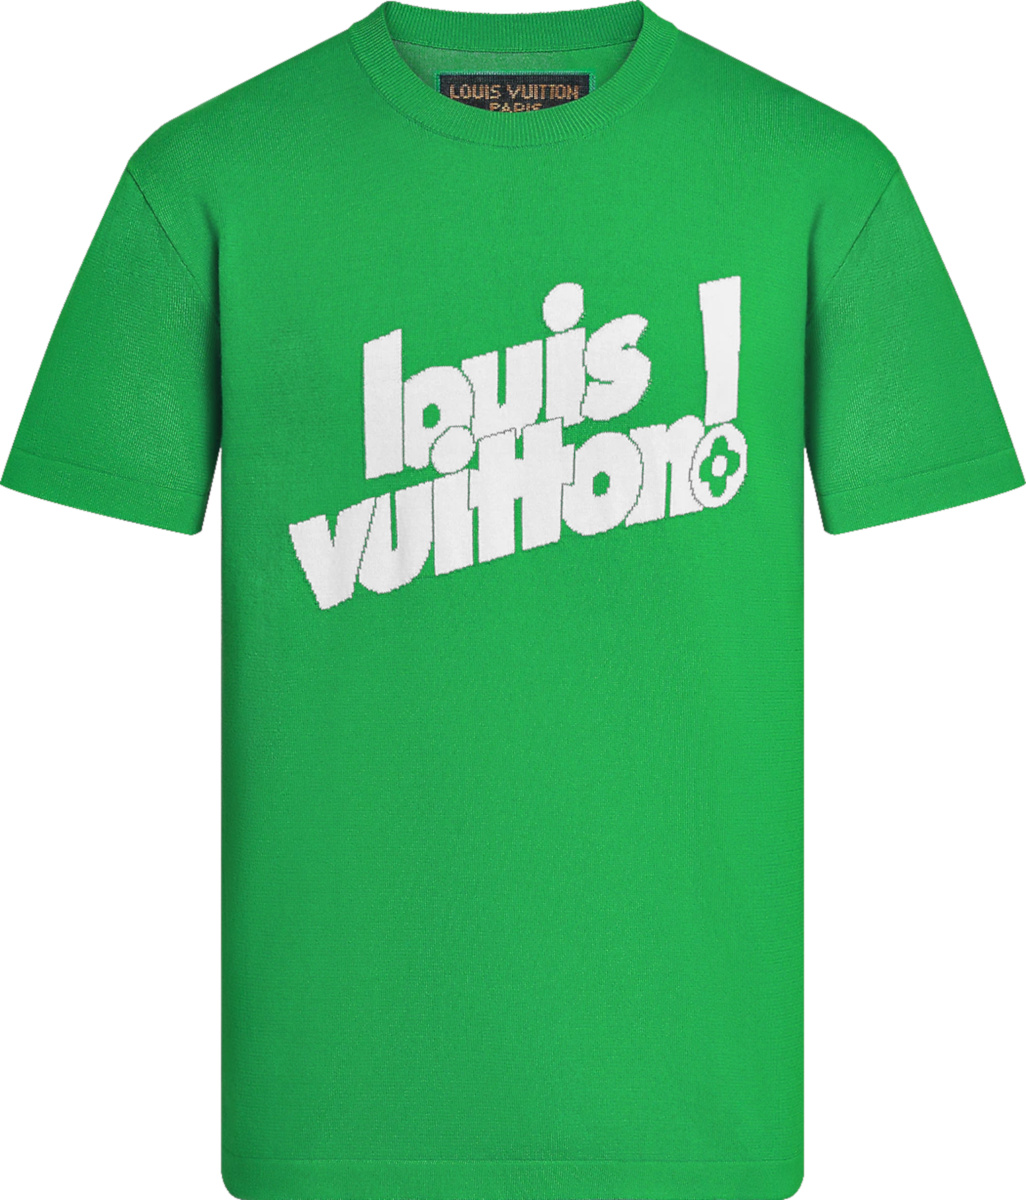 green lv for men t-shirts